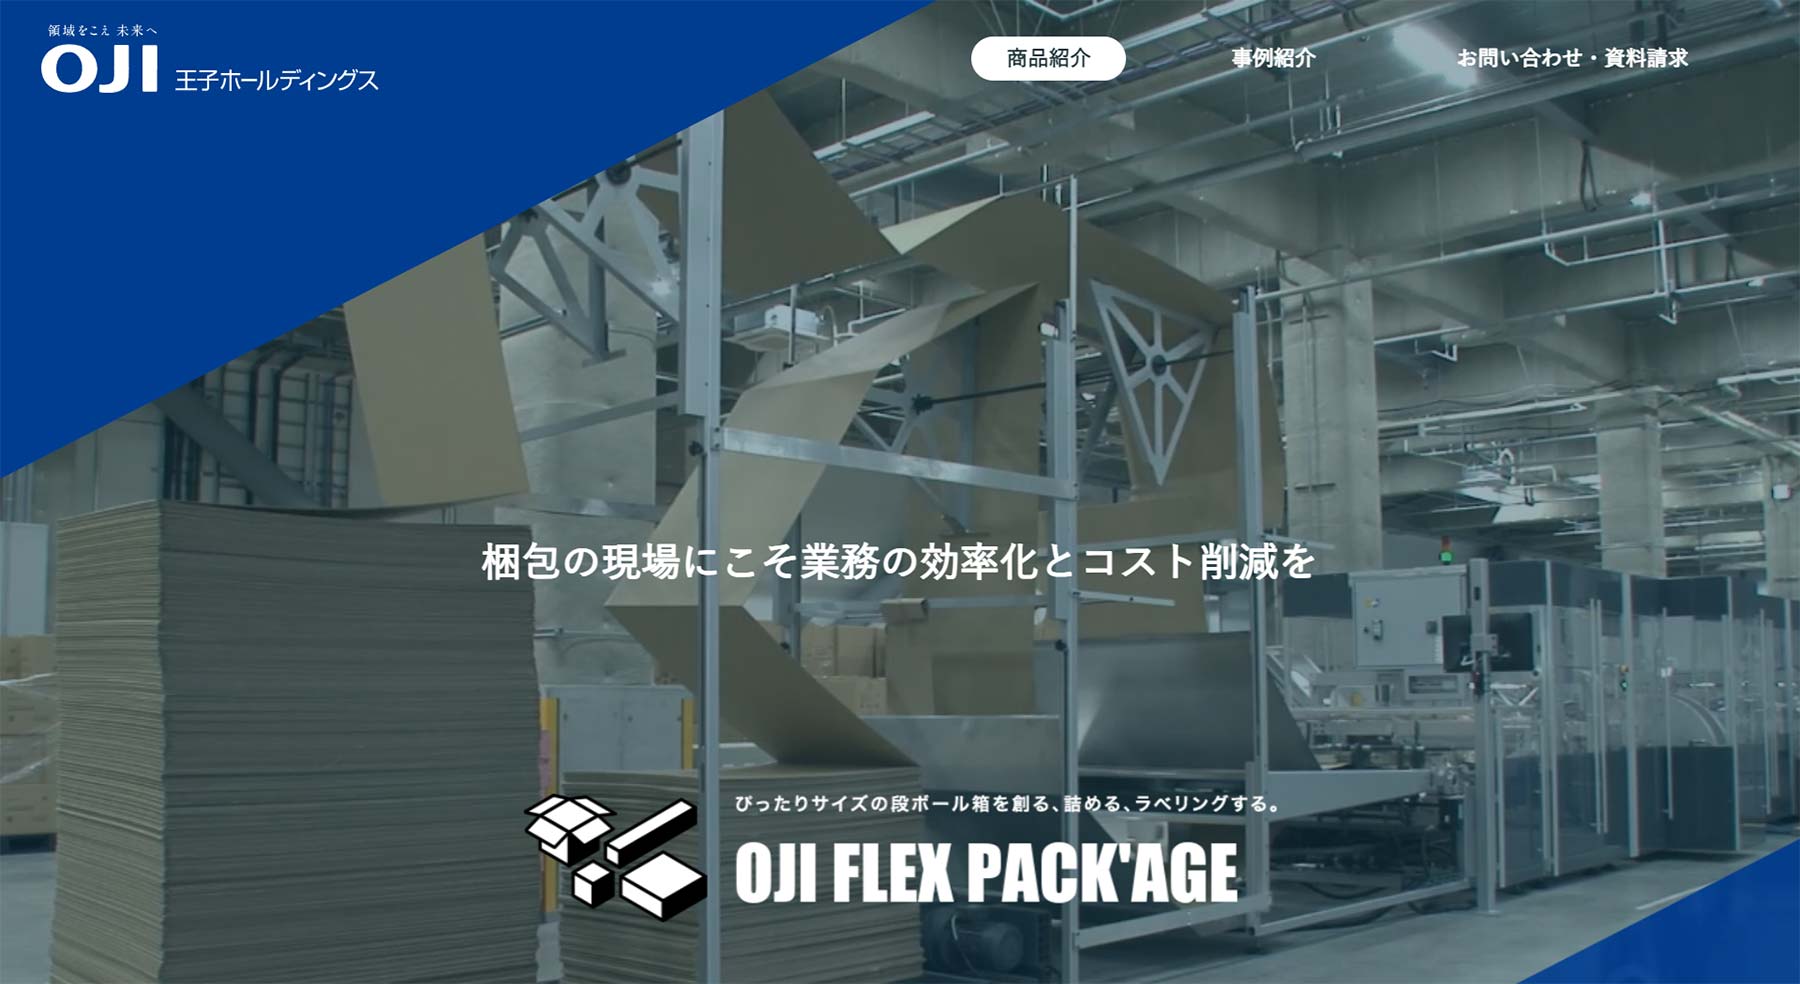 OJI FLEX PACK’AGE公式Webサイト